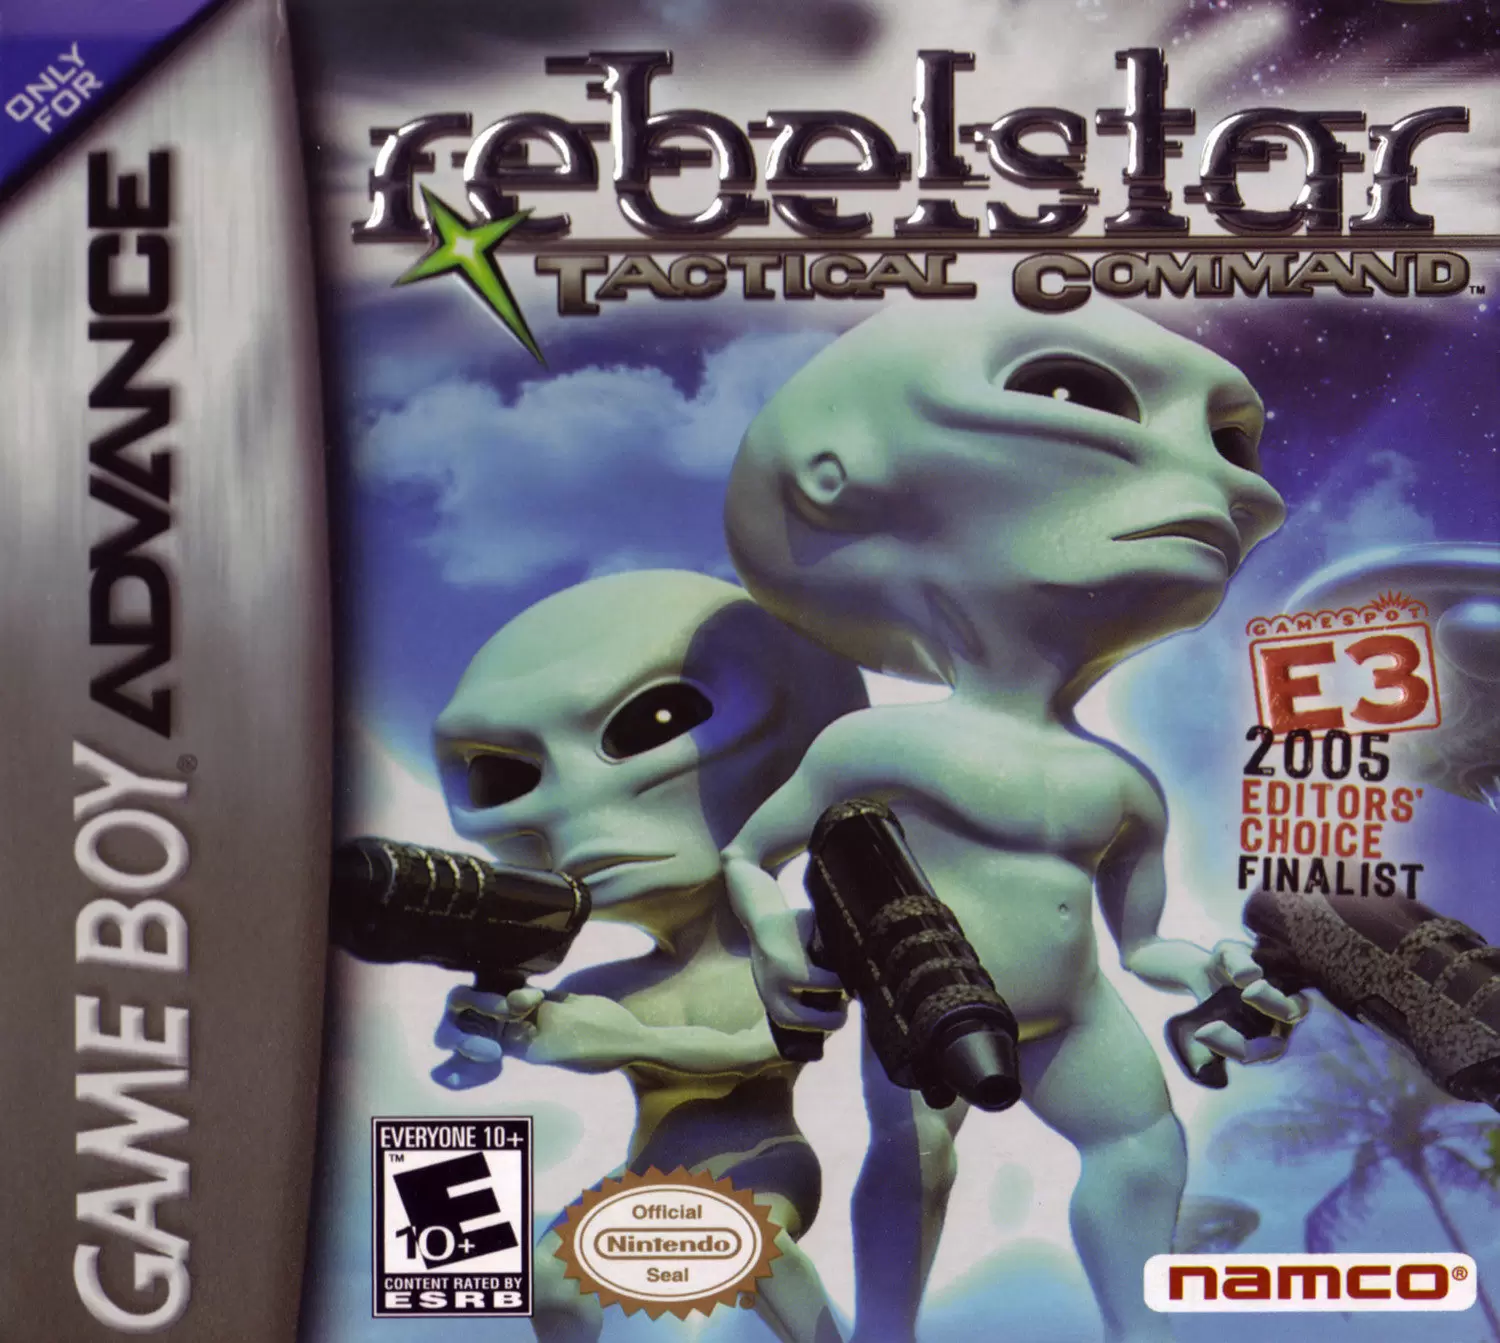 Game Boy Advance Games - Rebelstar: Tactical Command